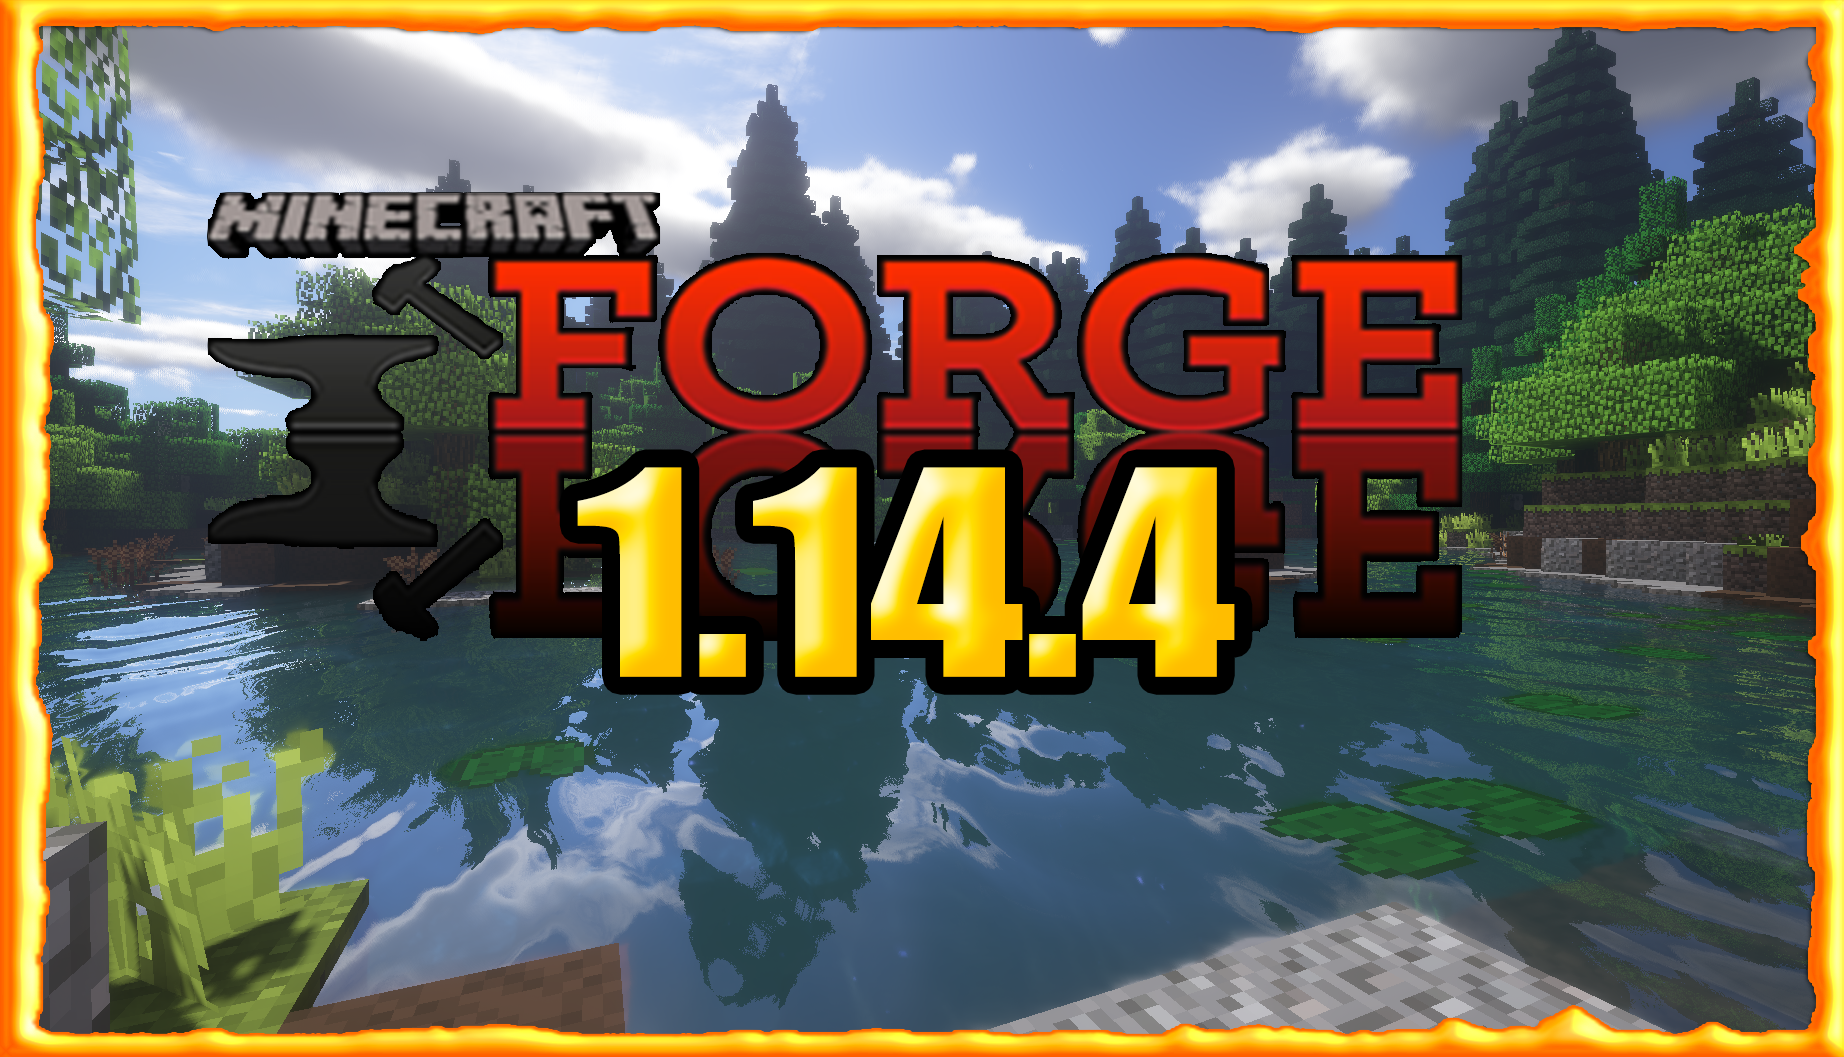 Forge 1.3. Фордж 1.14.4. Новая версия Forge. Обложка Curse Forge. Сайт Forge майнкрафт взломали.